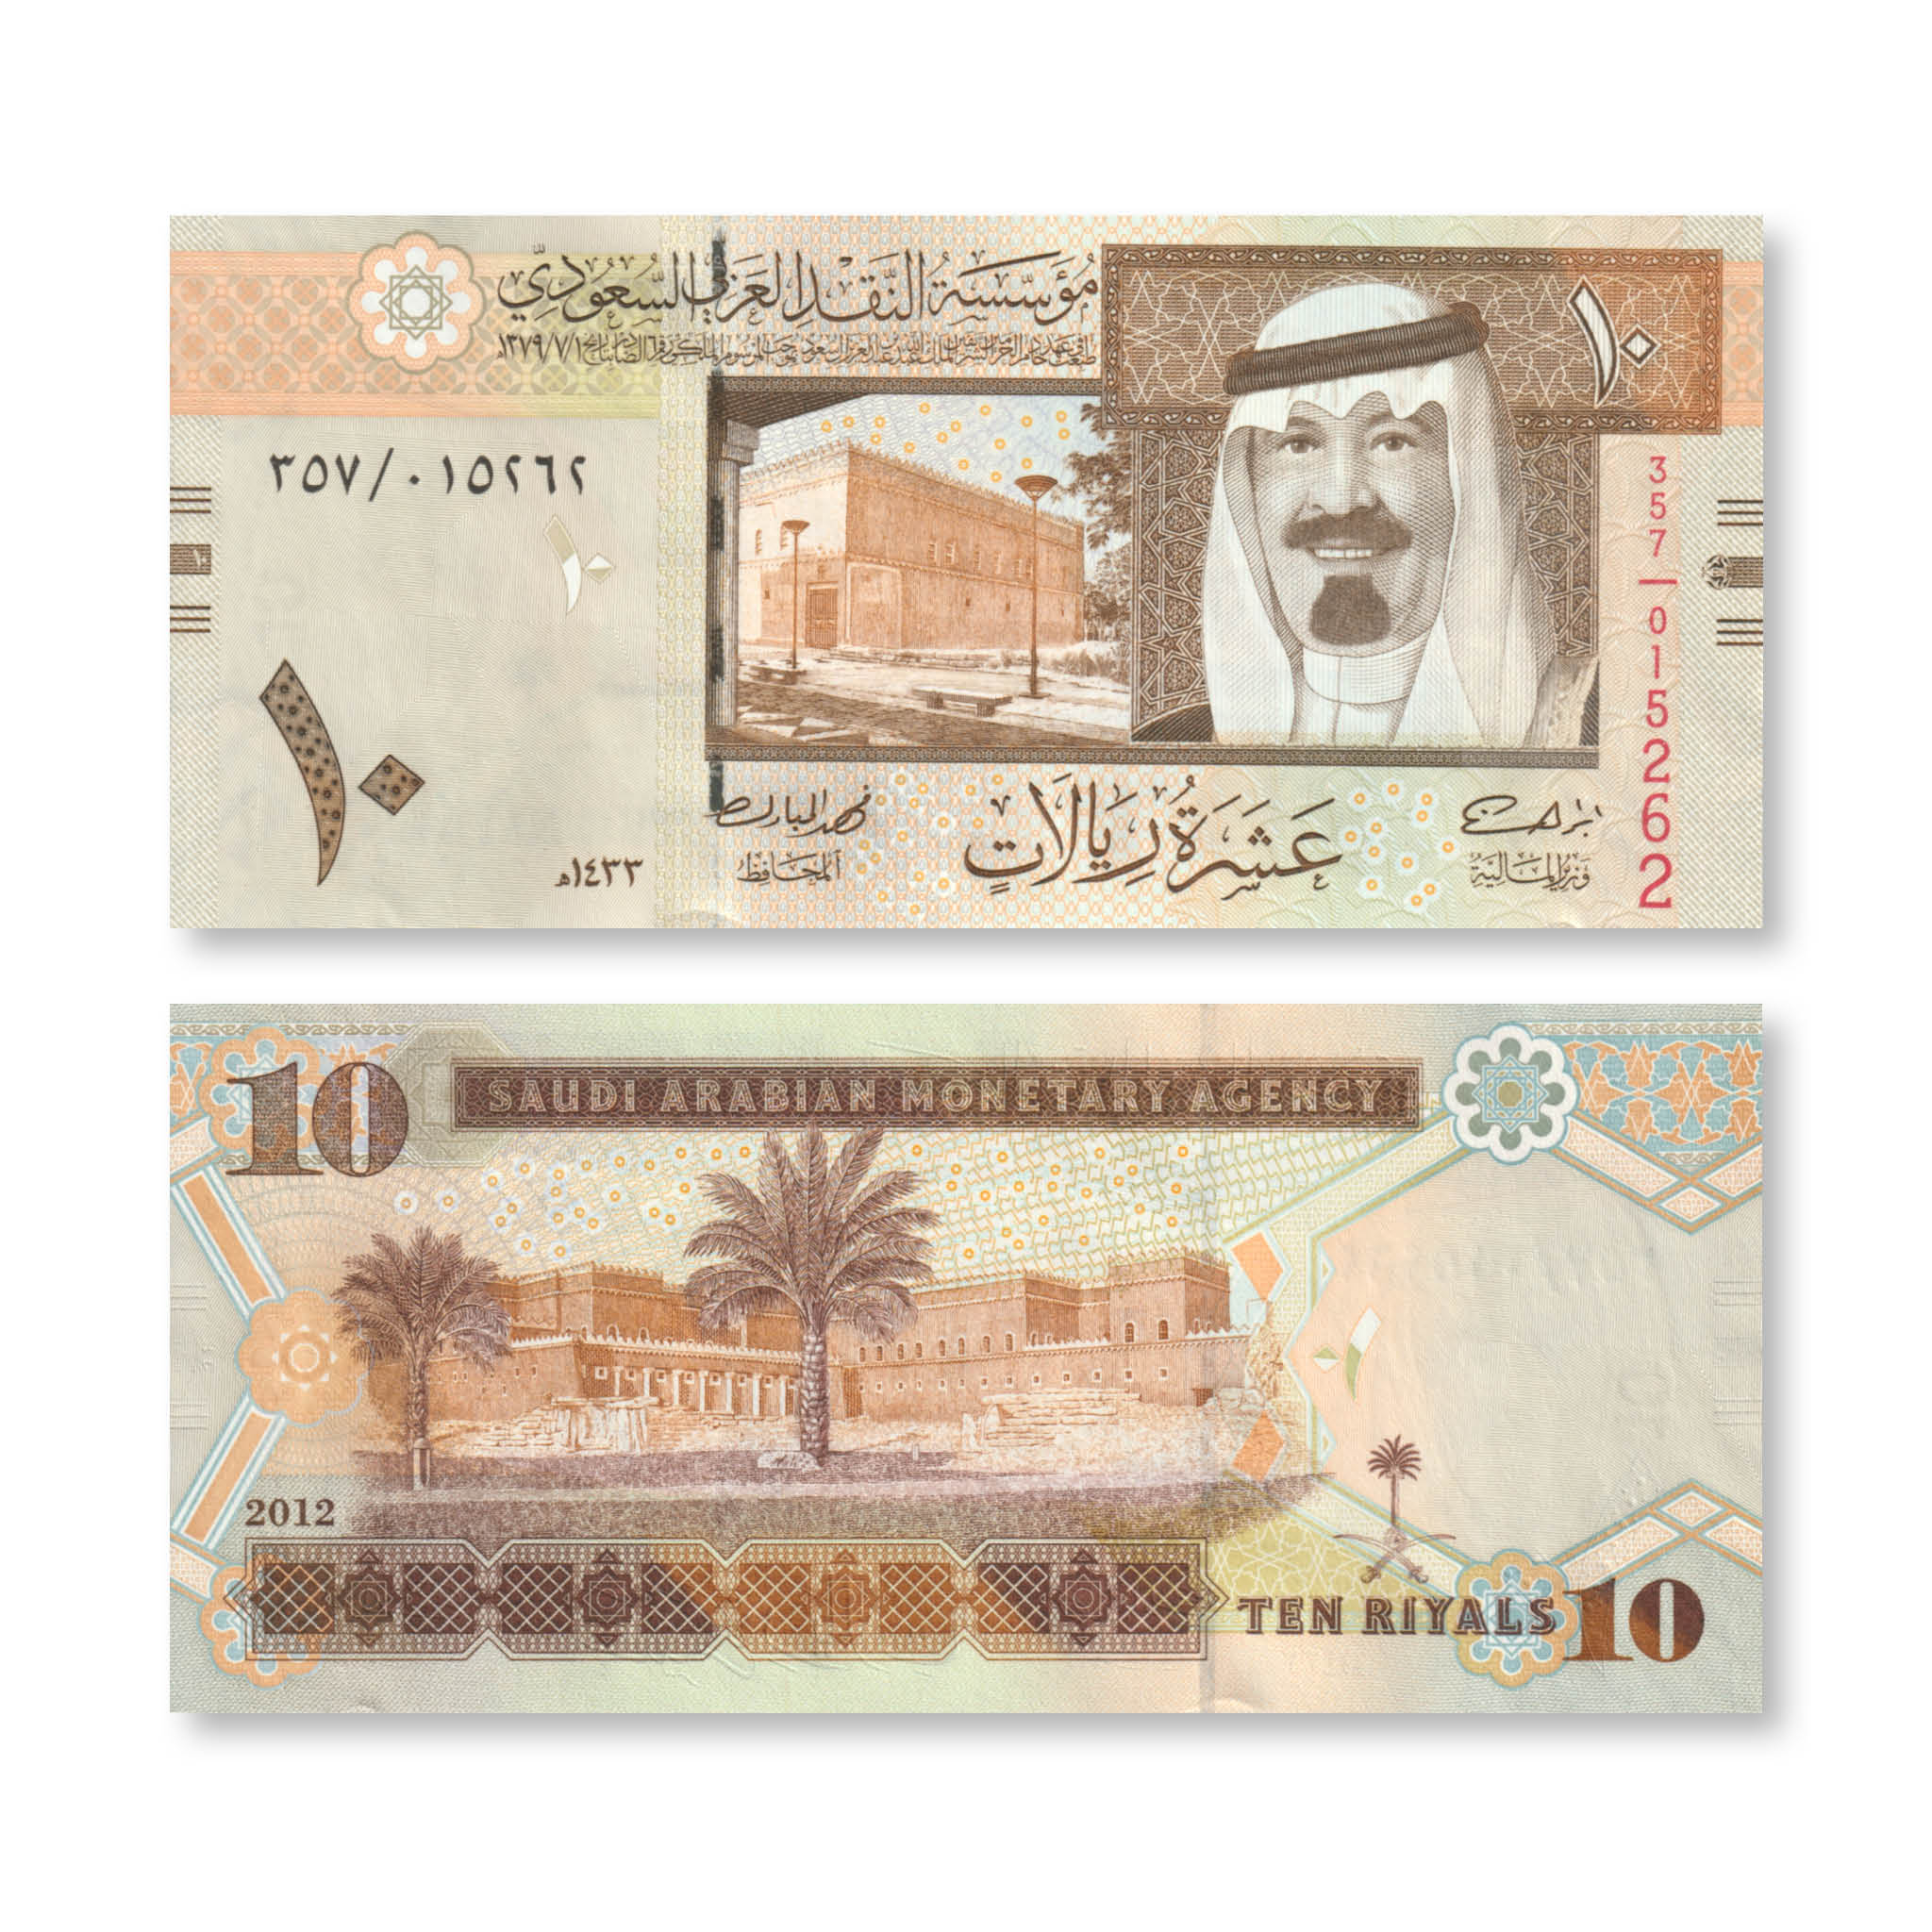 Saudi Arabia 10 Riyals, 2012, B132c, P33c, UNC - Robert's World Money - World Banknotes